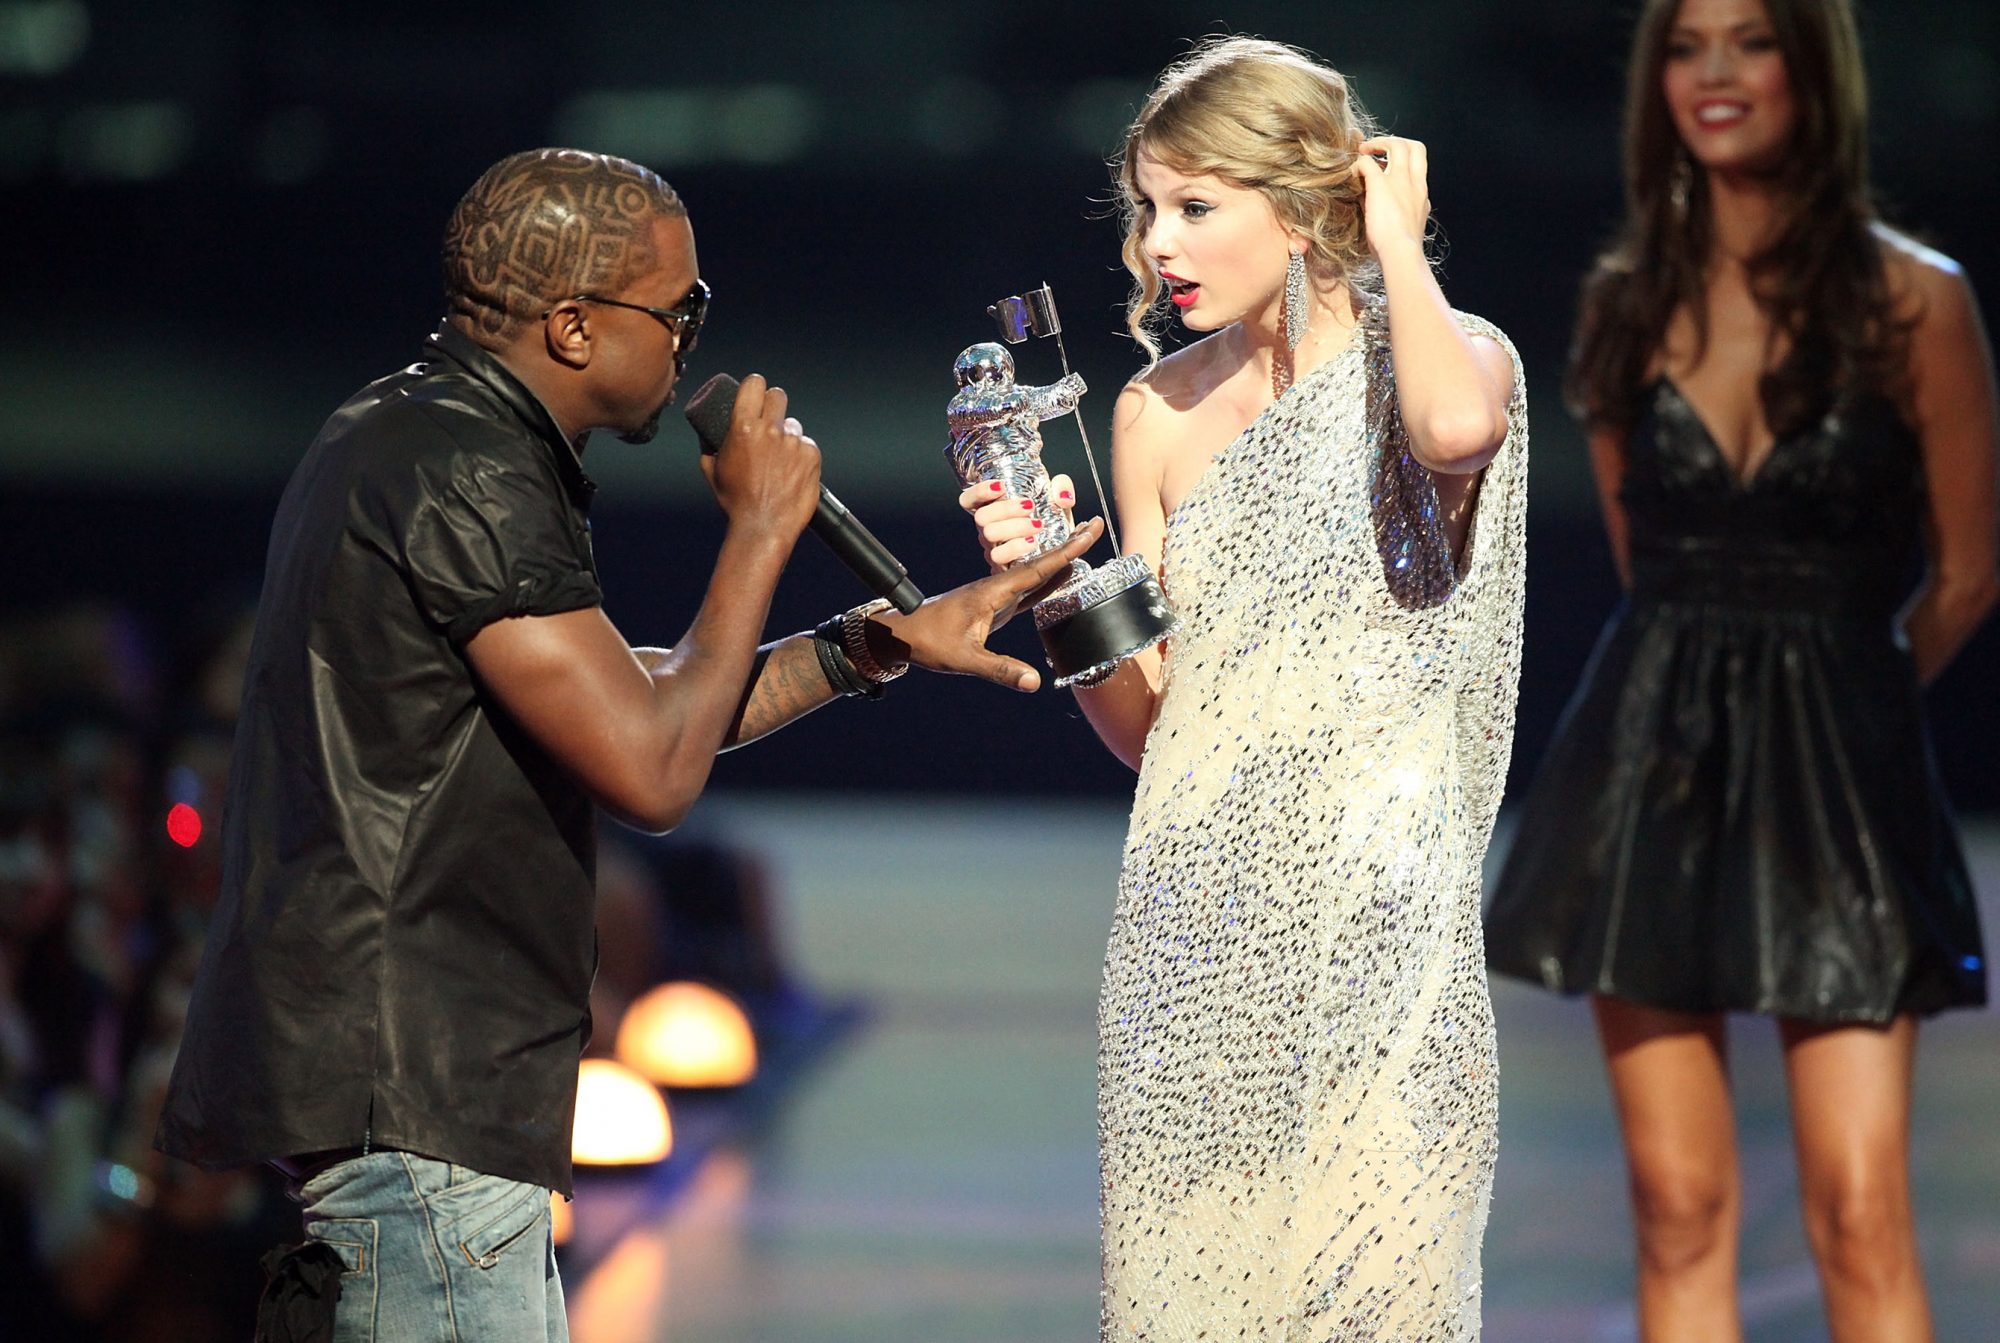 Kanye West and Taylor Swift at the 2009 VMAs